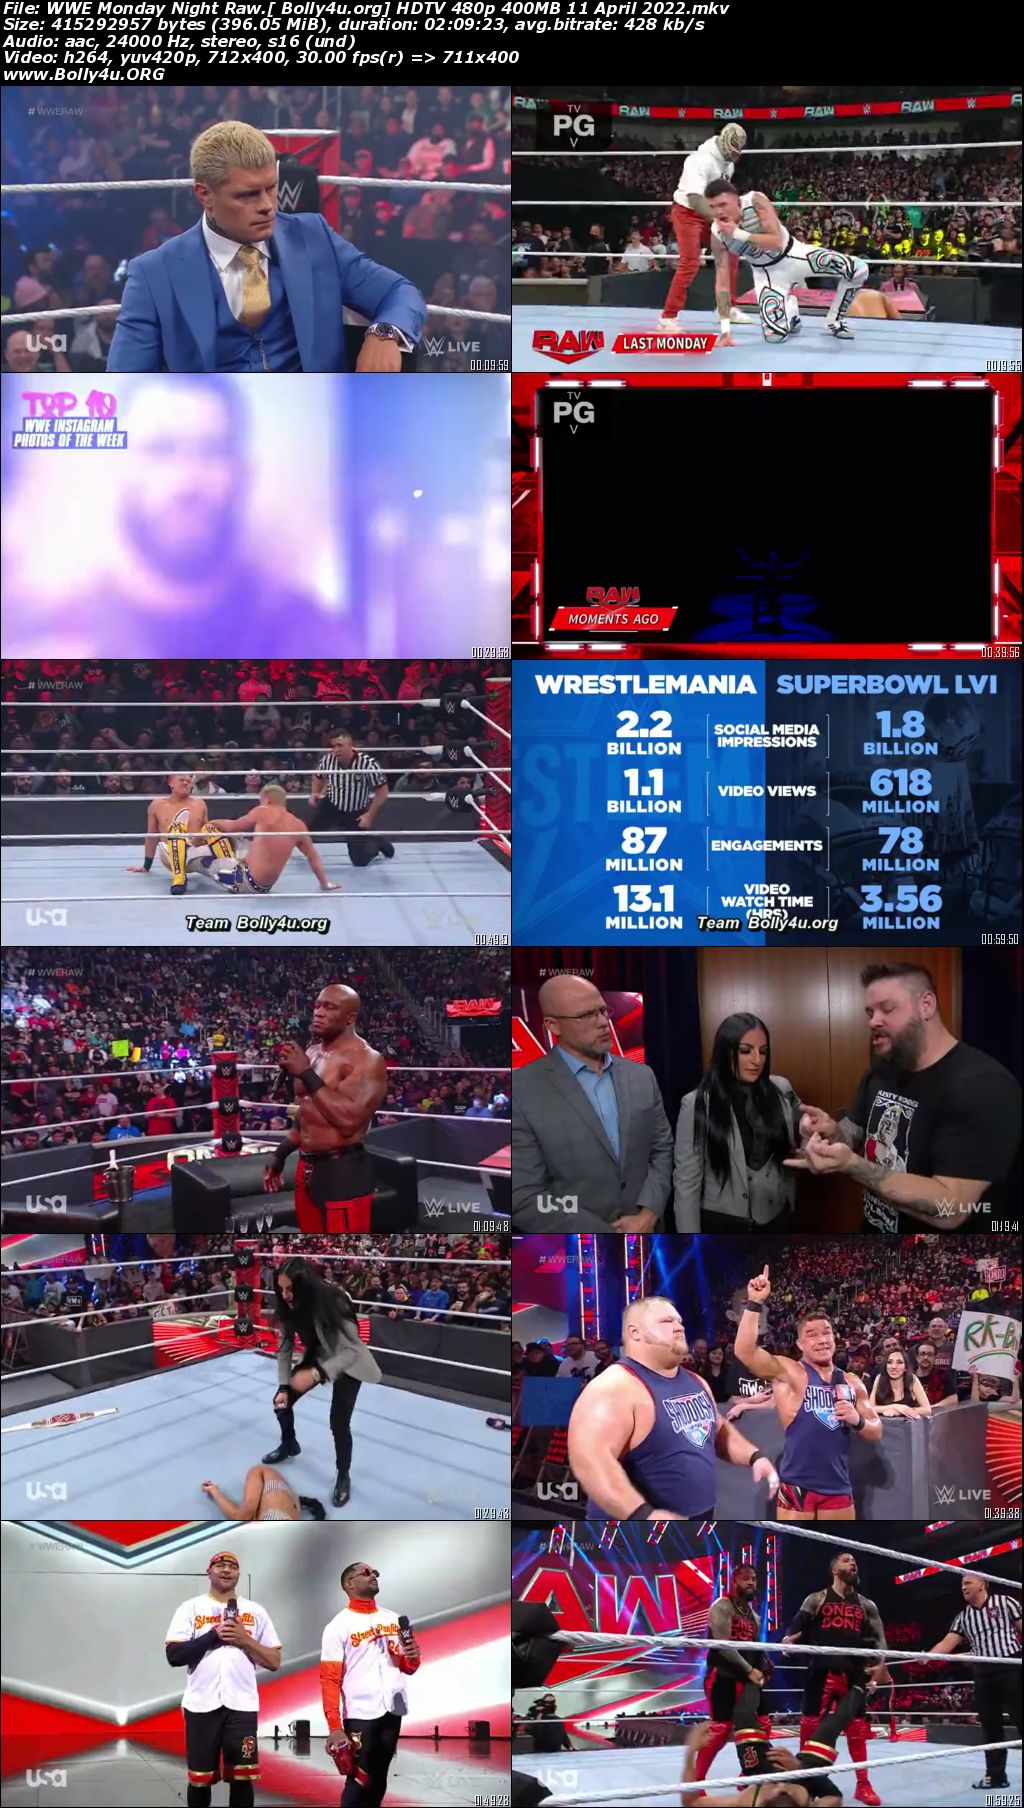 WWE Monday Night Raw HDTV 480p 400MB 11 April 2022 Download